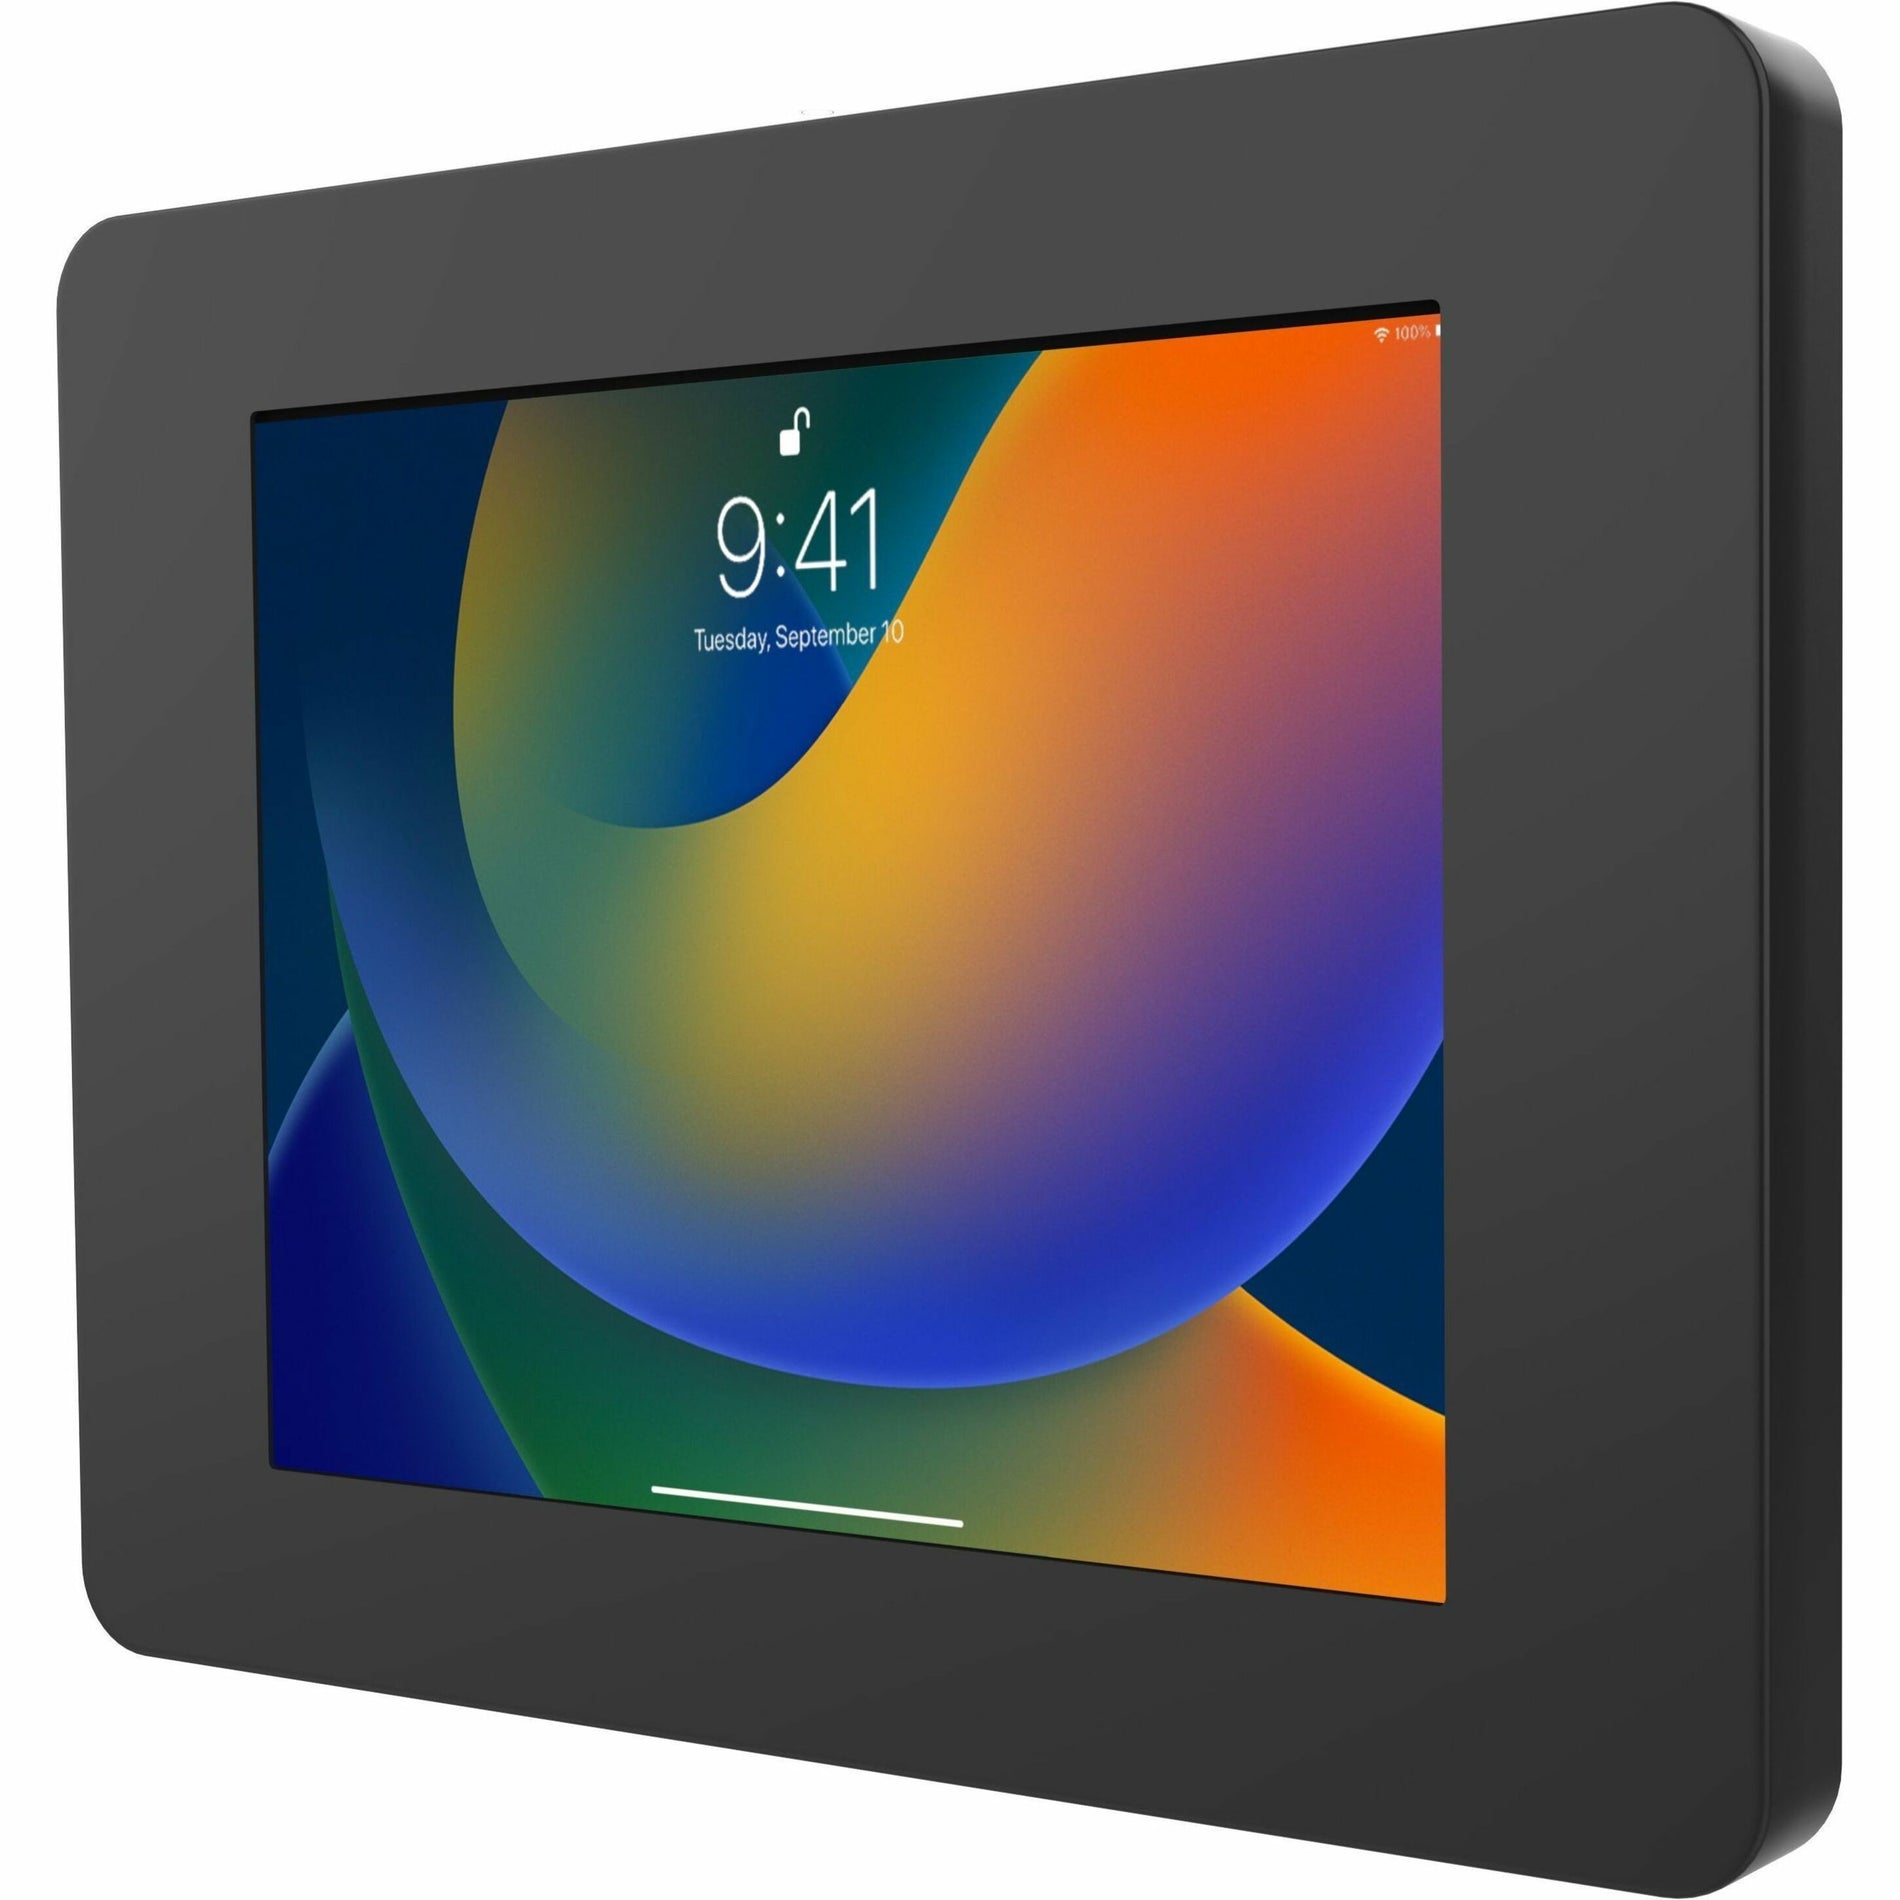 CTA Digital PAD-PARAW Premium Locking Wall Mount for iPad 8th Gen, iPad Air 4, Galaxy Tab, Lenovo Tab 4, Surface Go, Galaxy Tab S5E, Zebra Tablets, And More (Black)